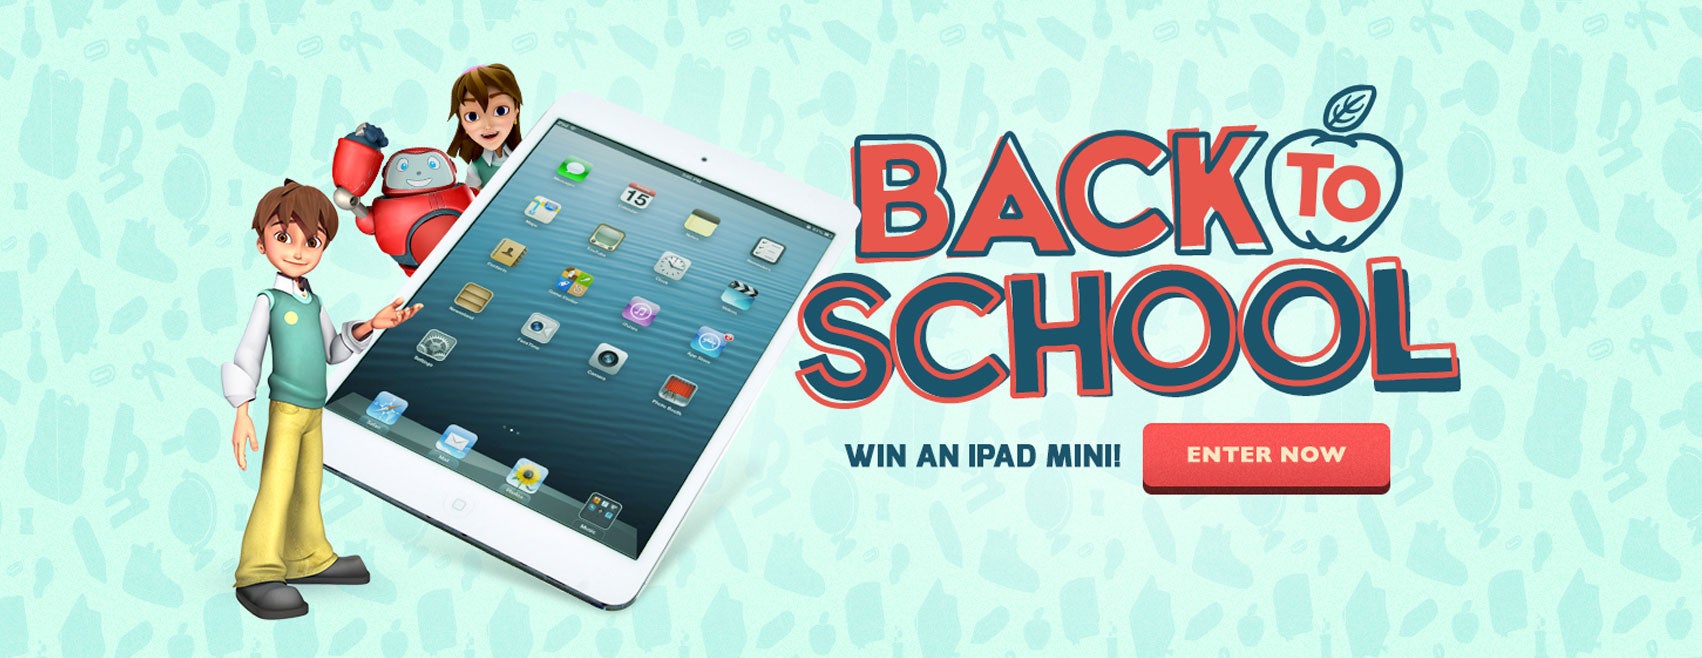 Win an iPad Mini - Just in Time for School!